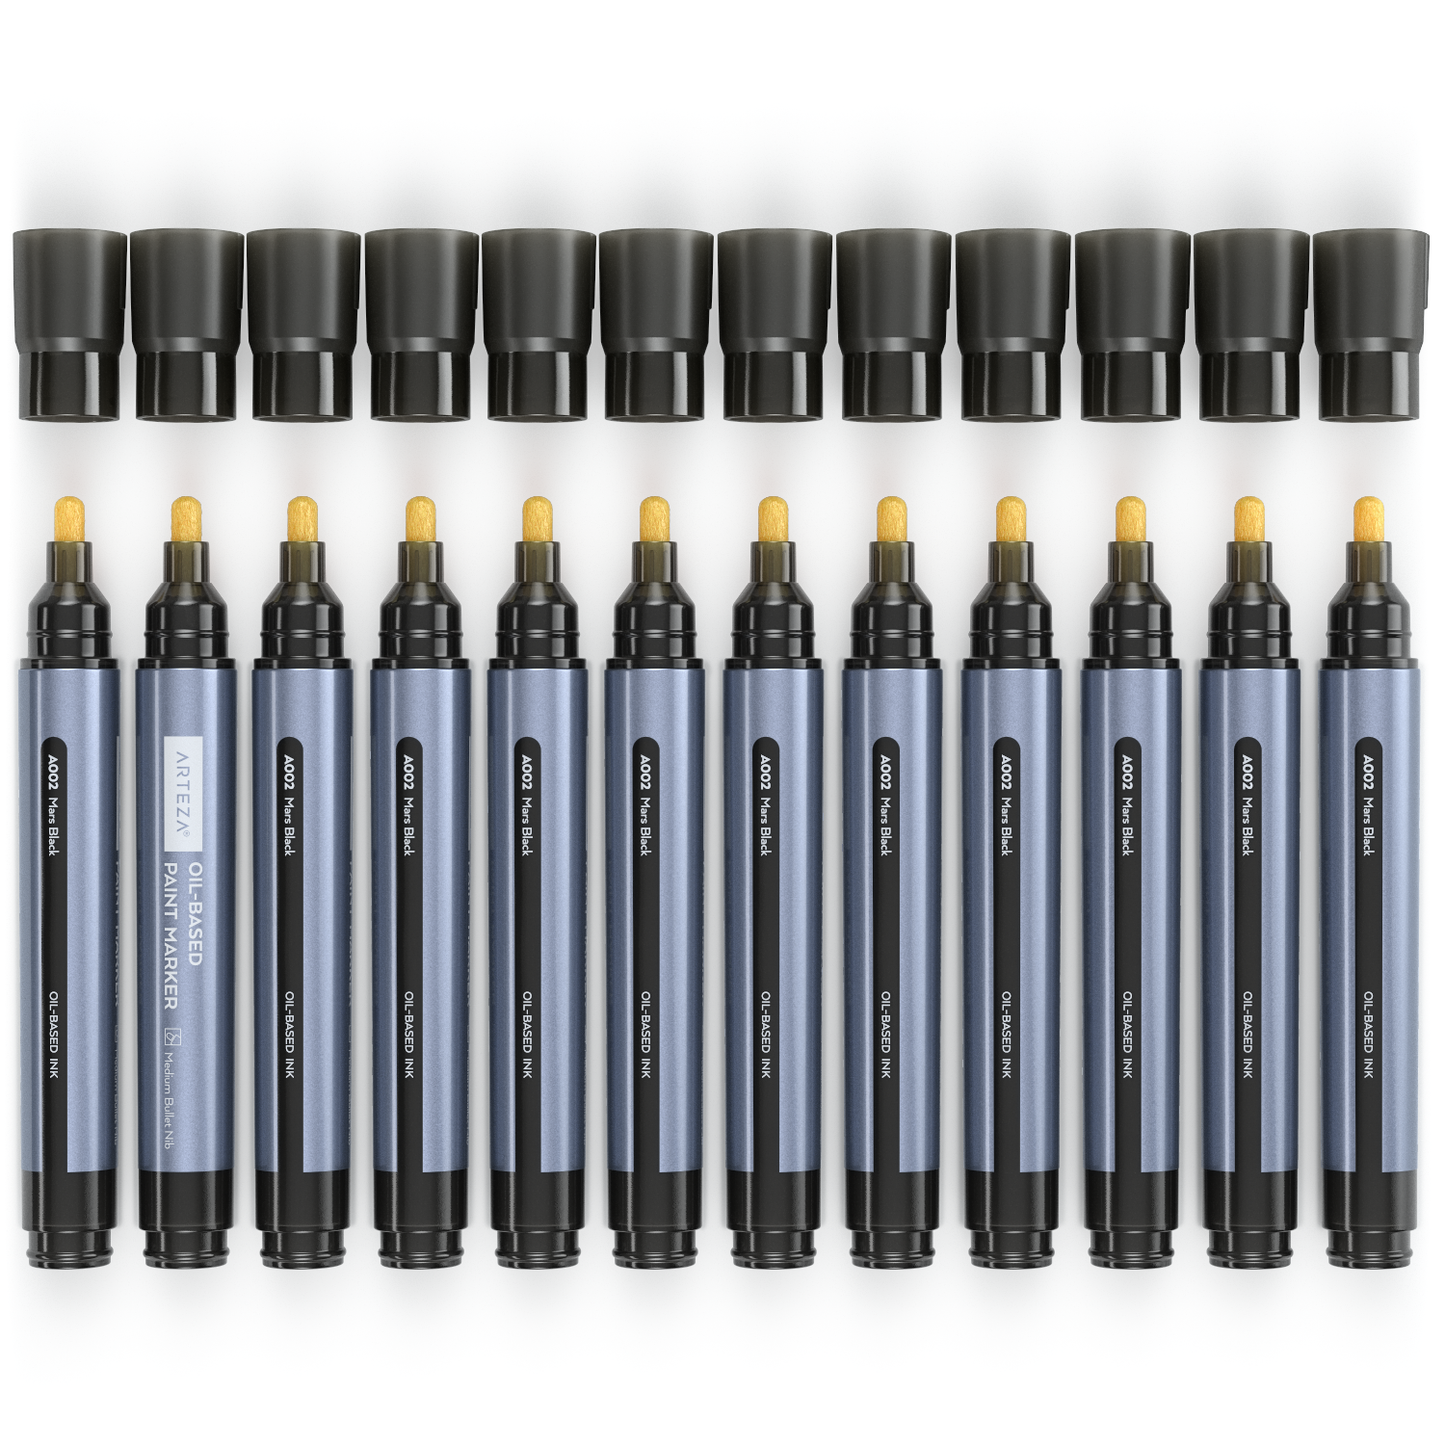 Arteza Black Oil Based Paint Markers